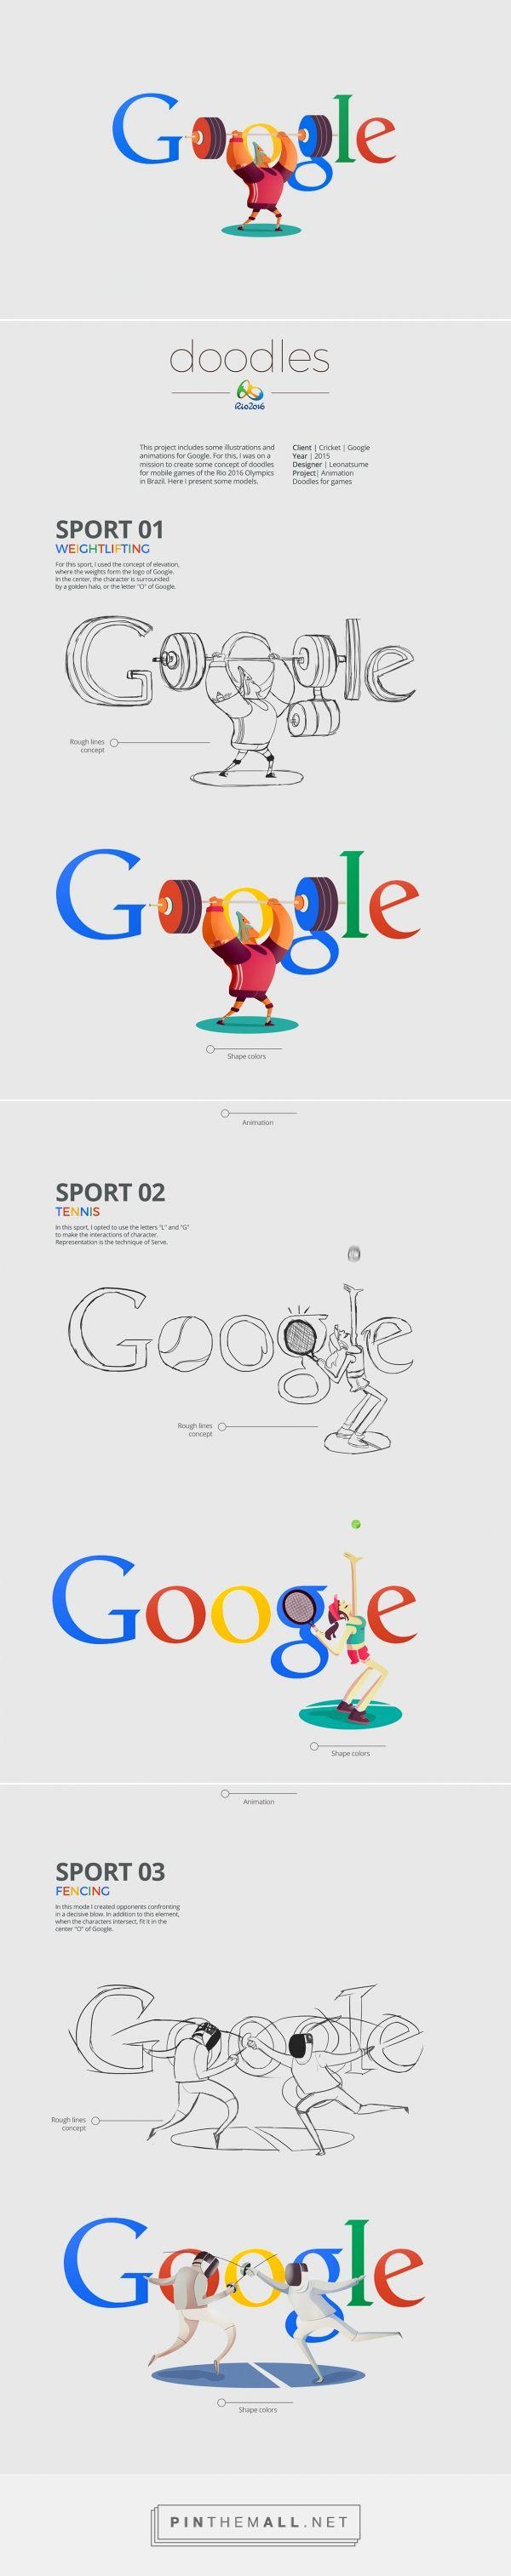 Halo Google Logo - Rio 2016 Olympic Games Google Doodle | Logo | Pinterest | Google ...